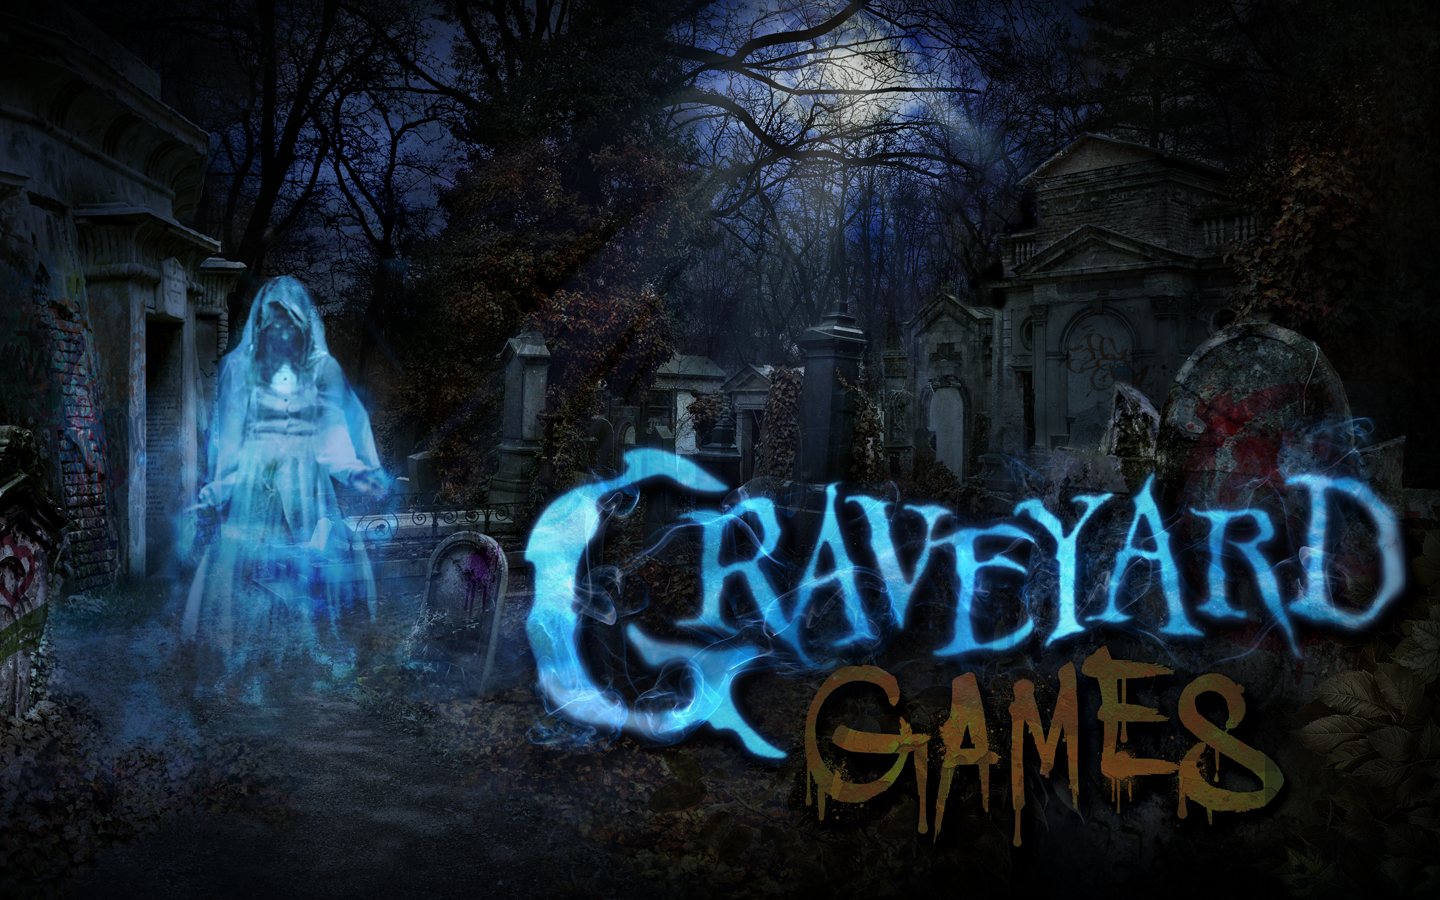 Graveyard-Games-is-coming-to-Universal-Orlandos-Halloween-Horror-Nights-2019.jpg